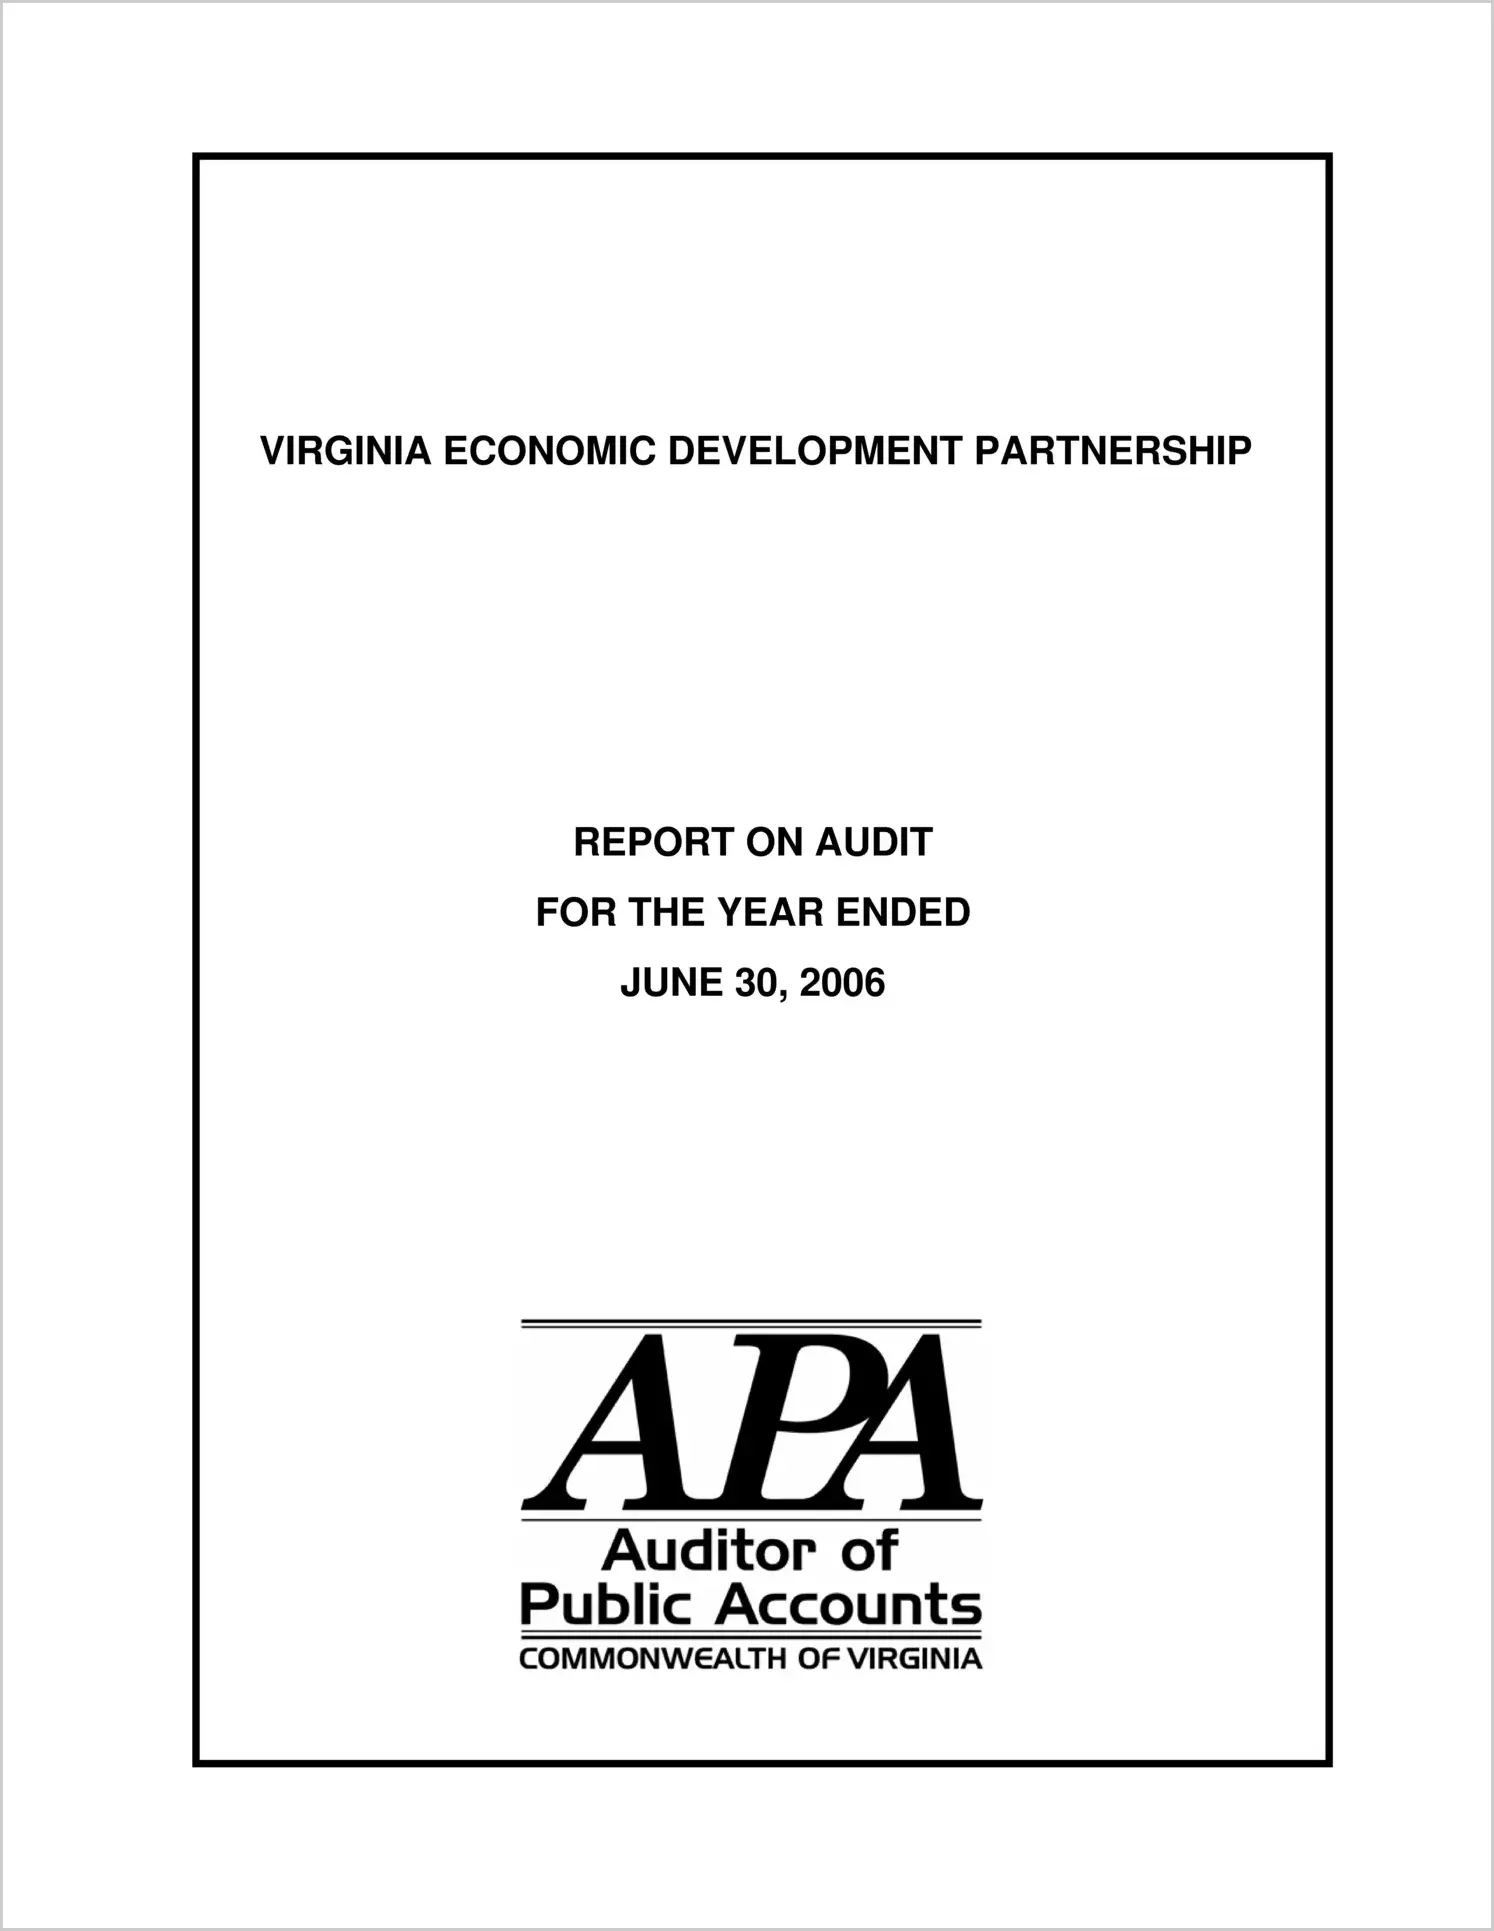 Virginia Economic Development Partnership for the year ended June 30, 2006